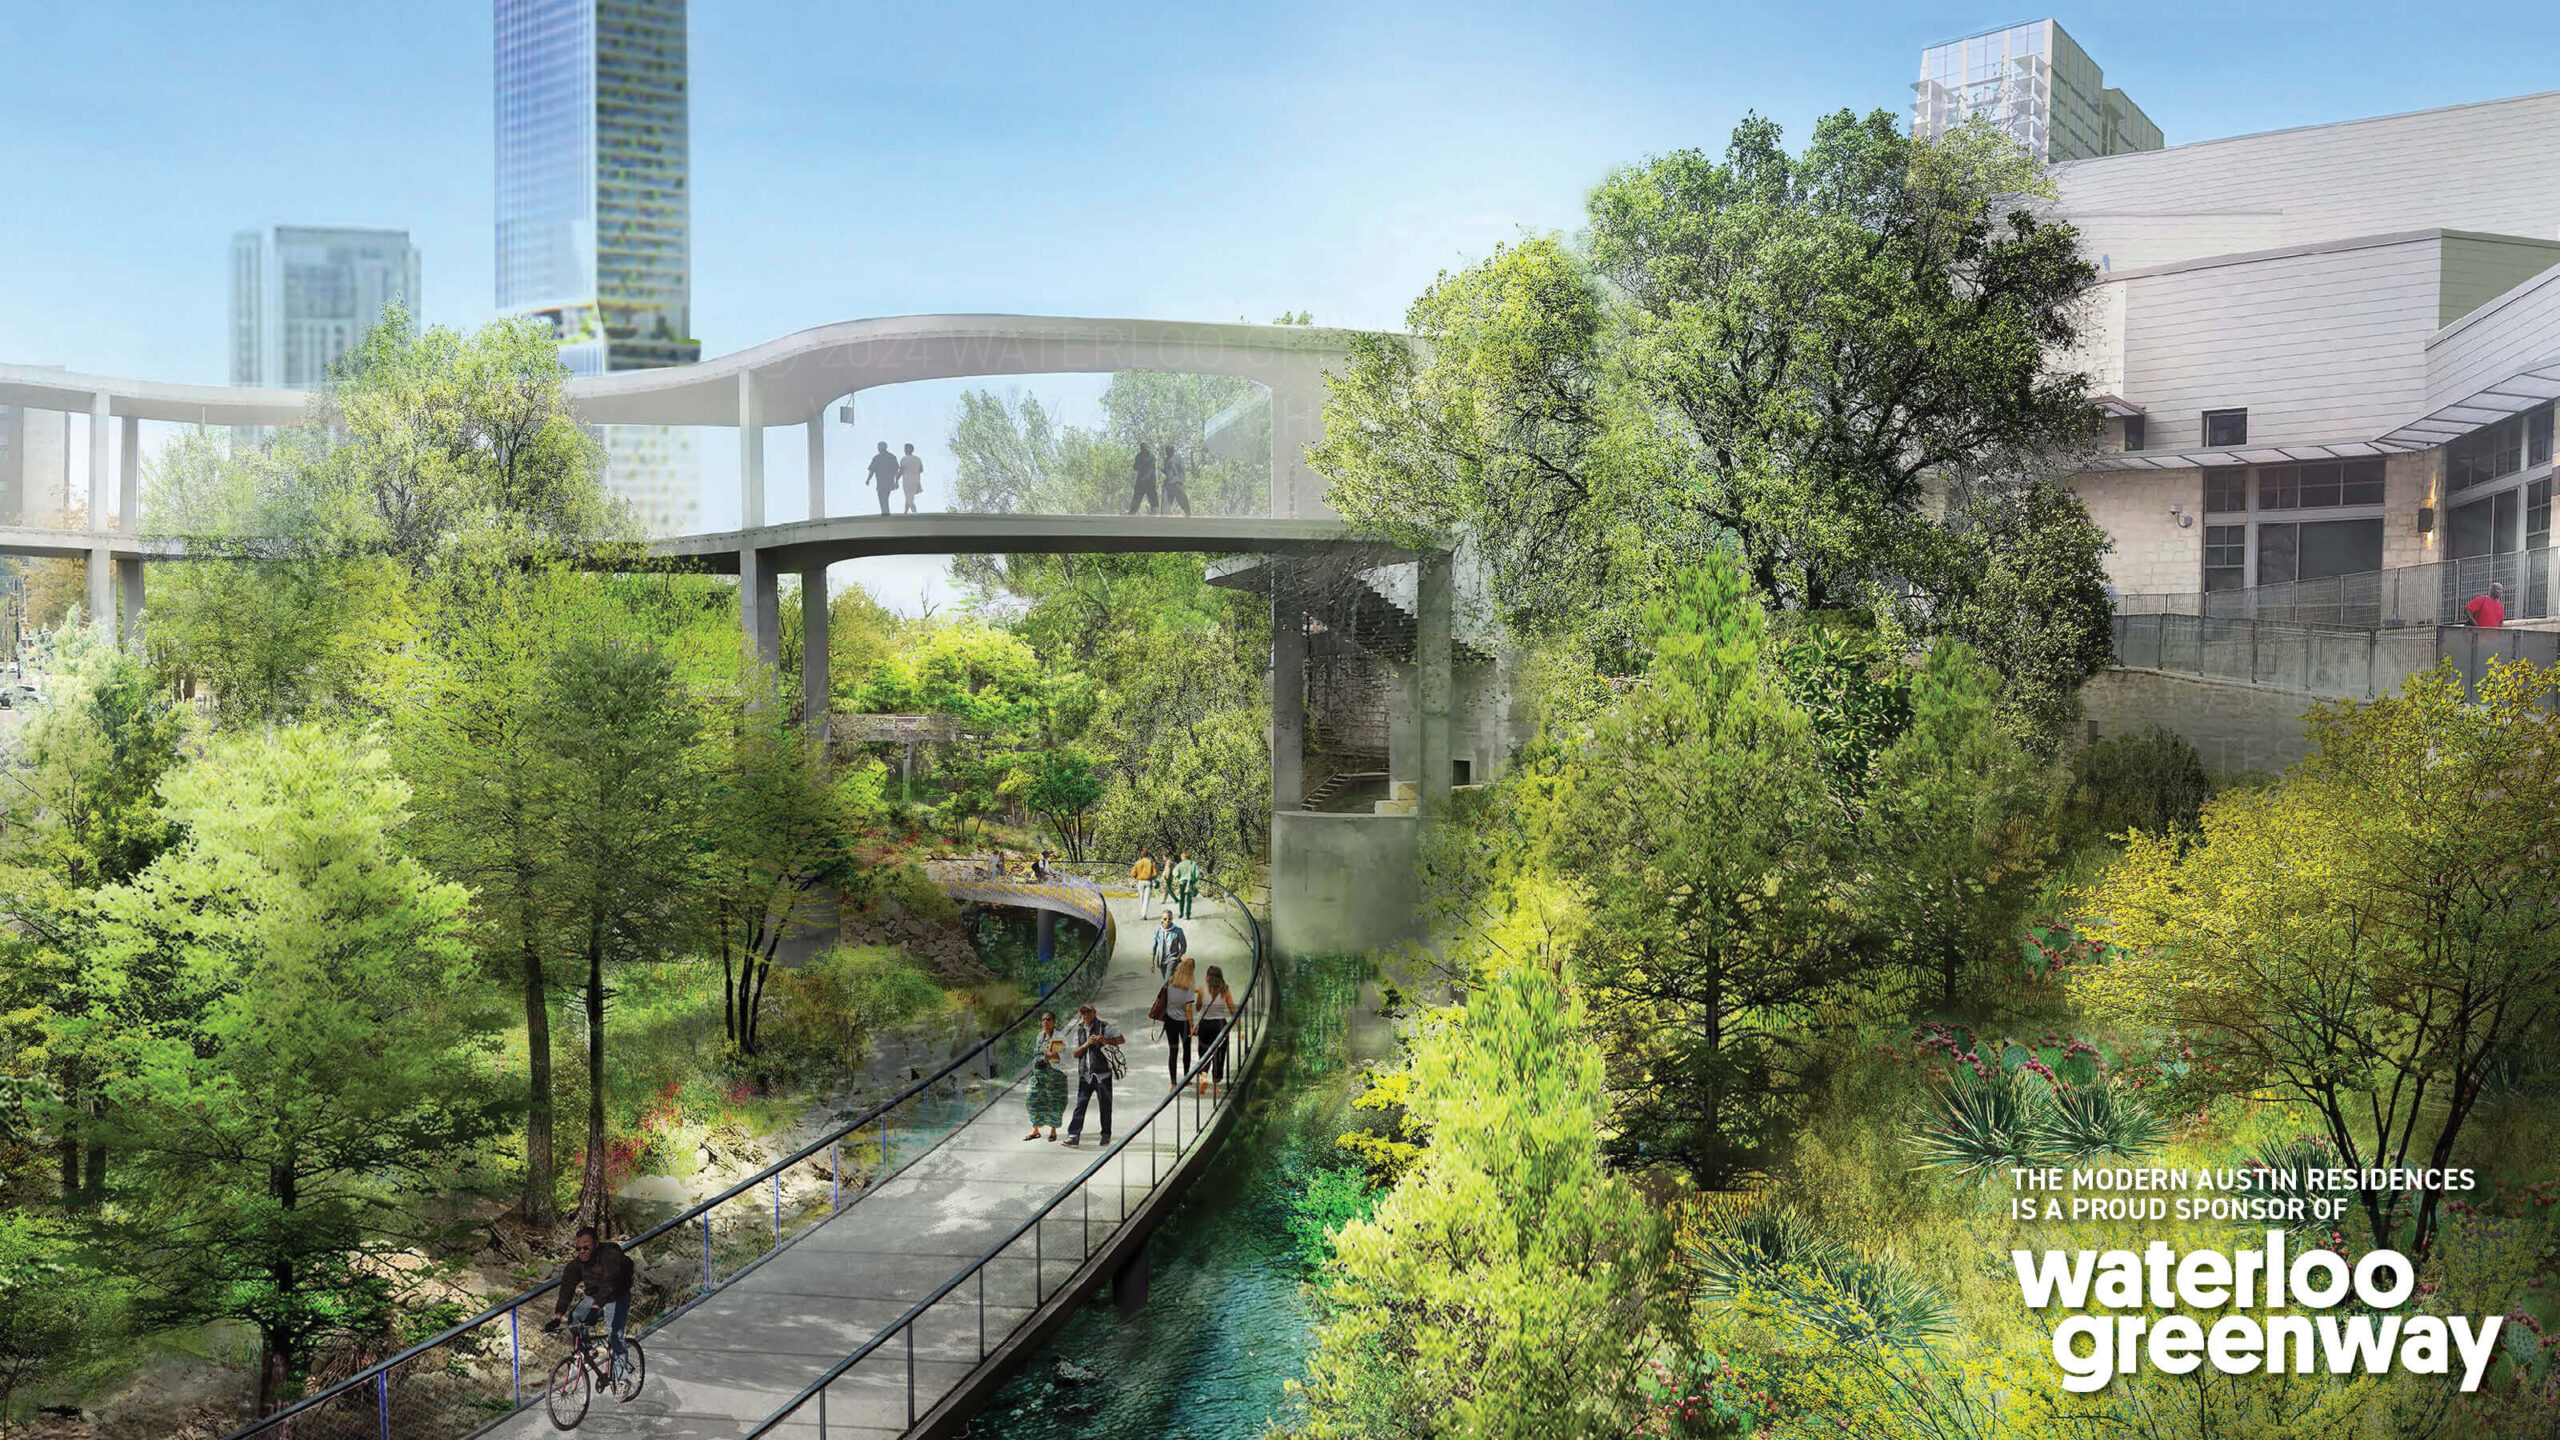 The Modern Austin neighborhood - Waterloo Greenway where nature and the city merge